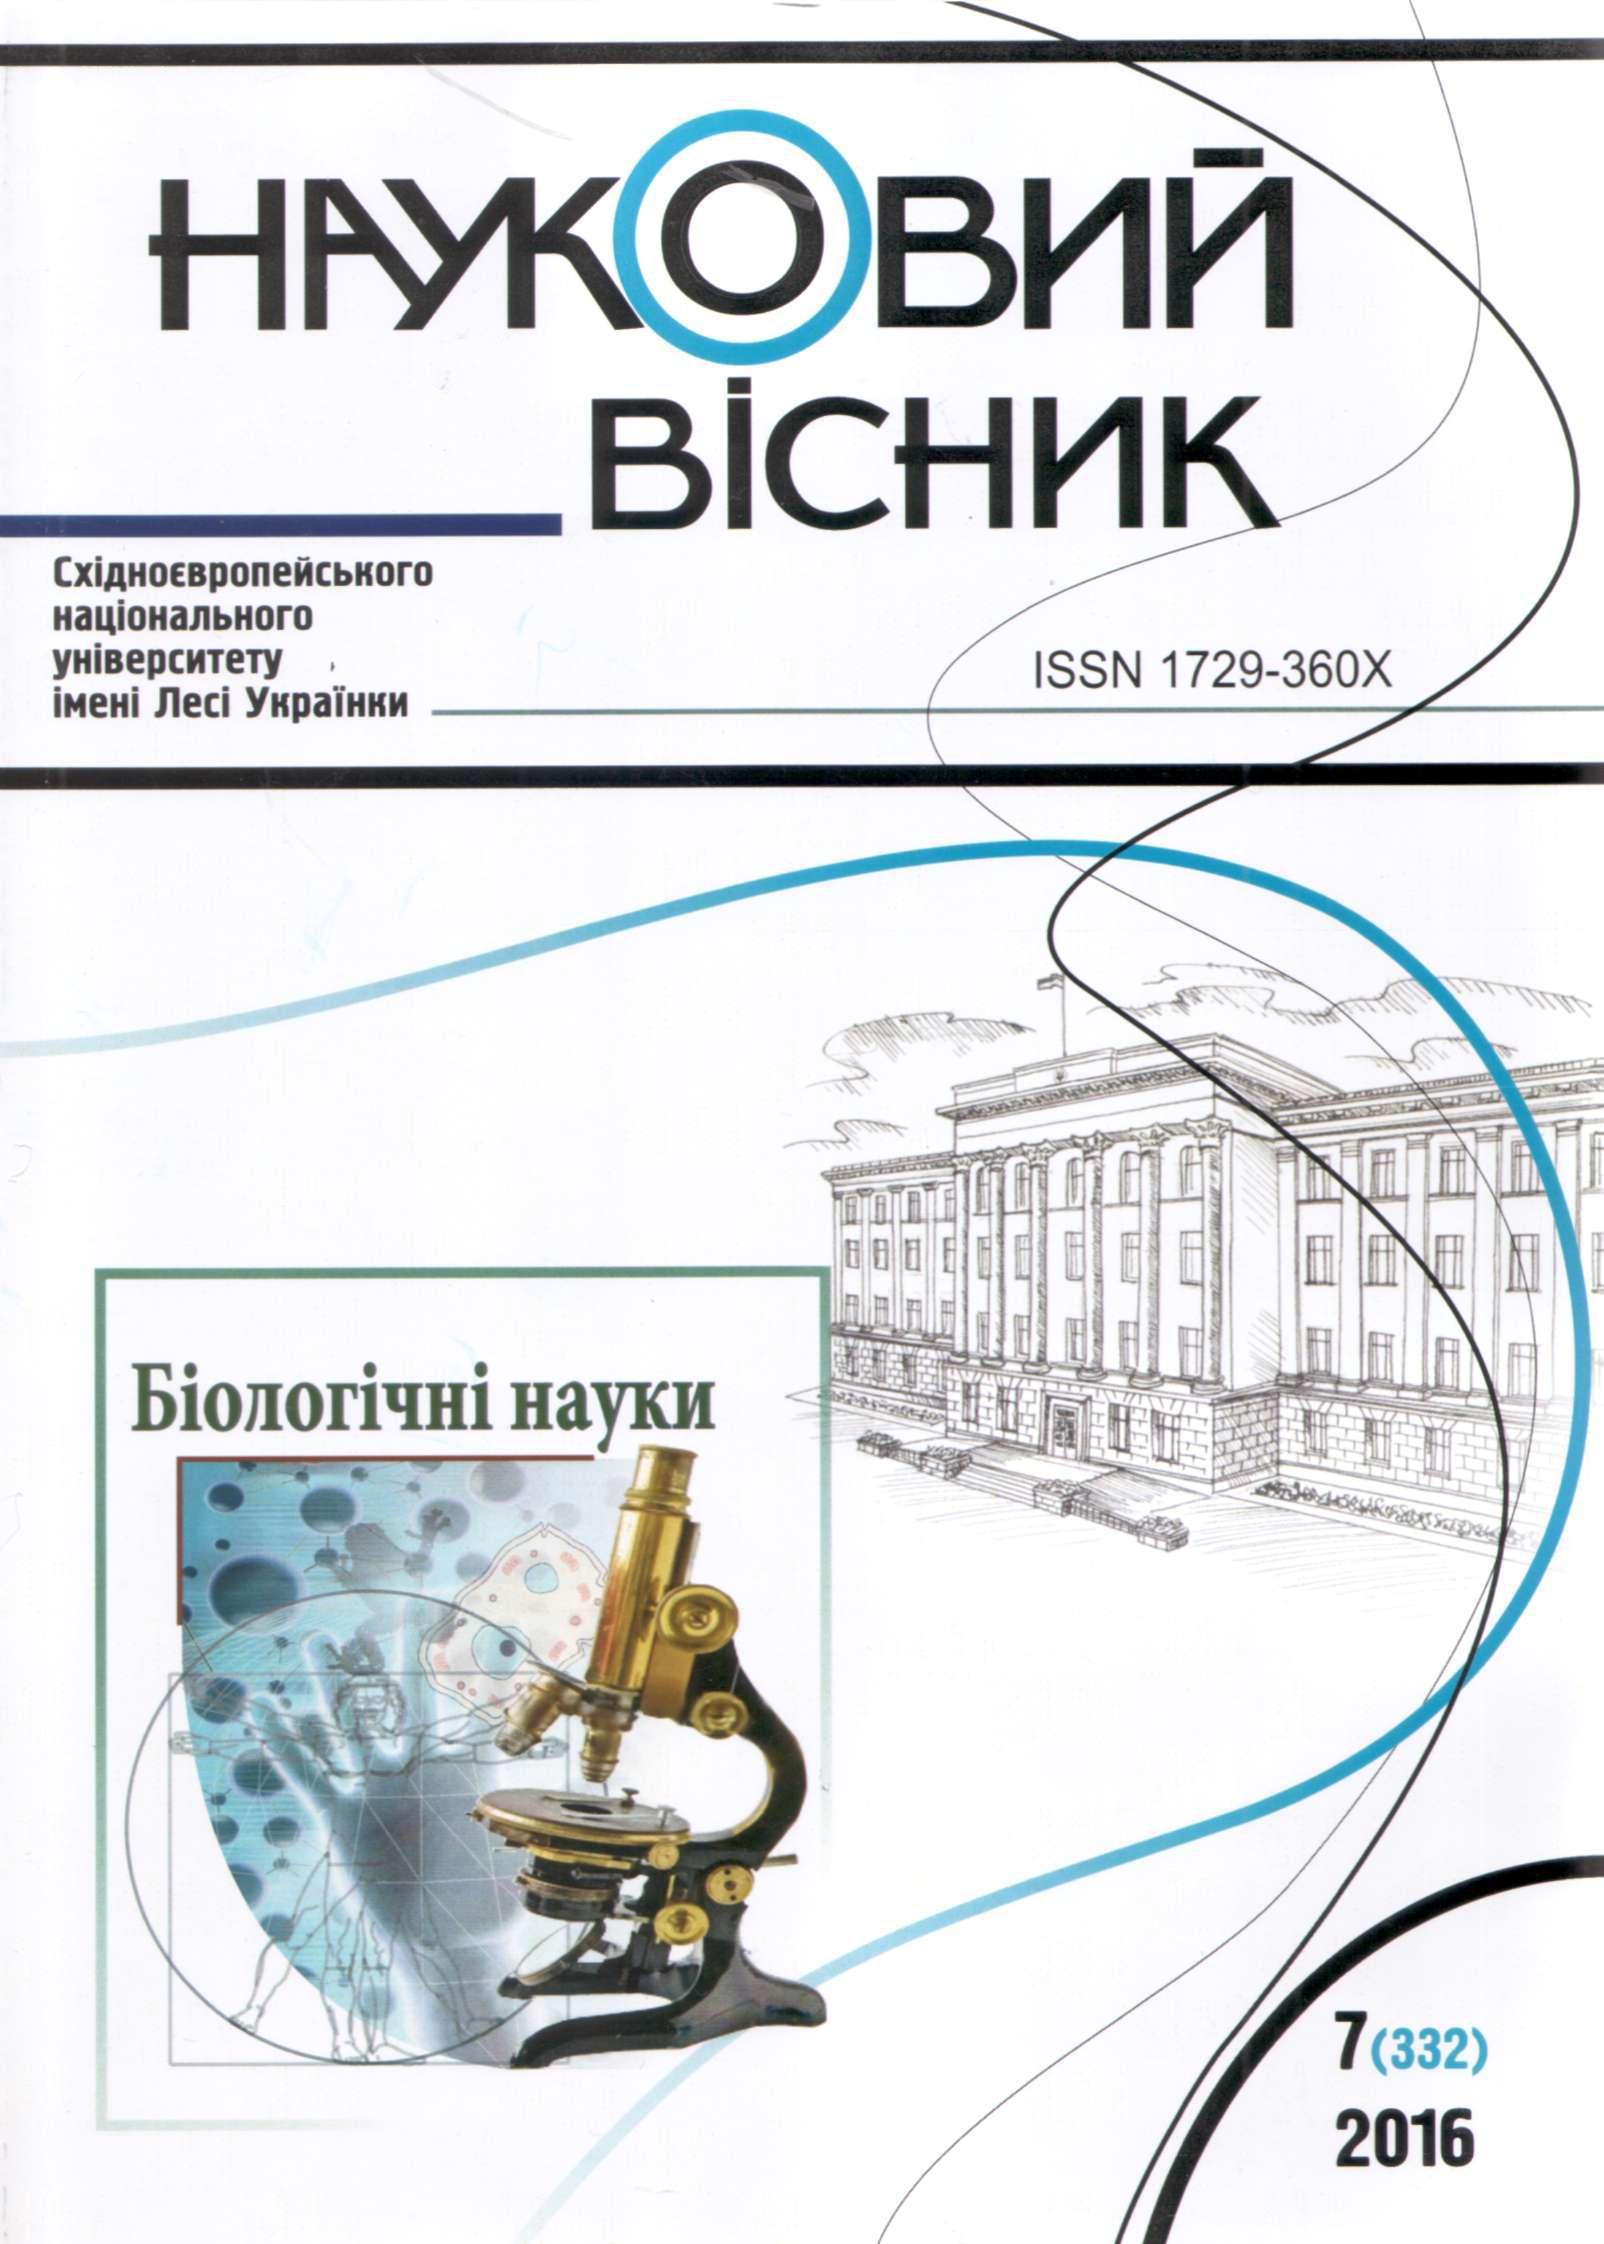 					View No. 7(332) (2016): Lesia Ukrainka Eastern European National University Scientific Bulletin. Series: Biological Sciences
				